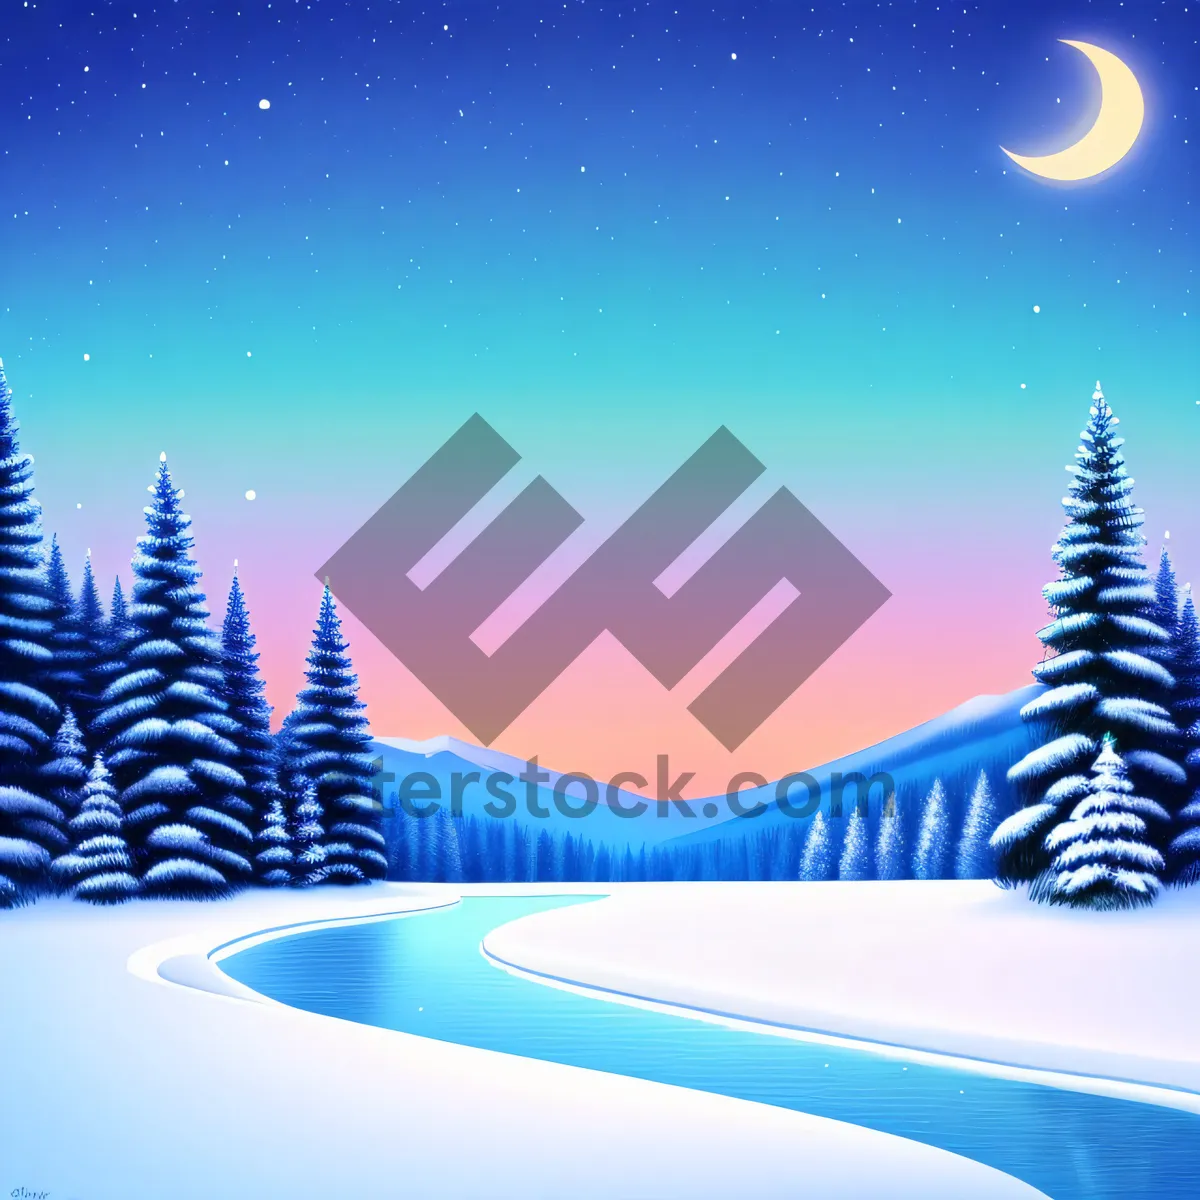 Picture of Festive Winter Wonderland Pine Tree Greeting Card